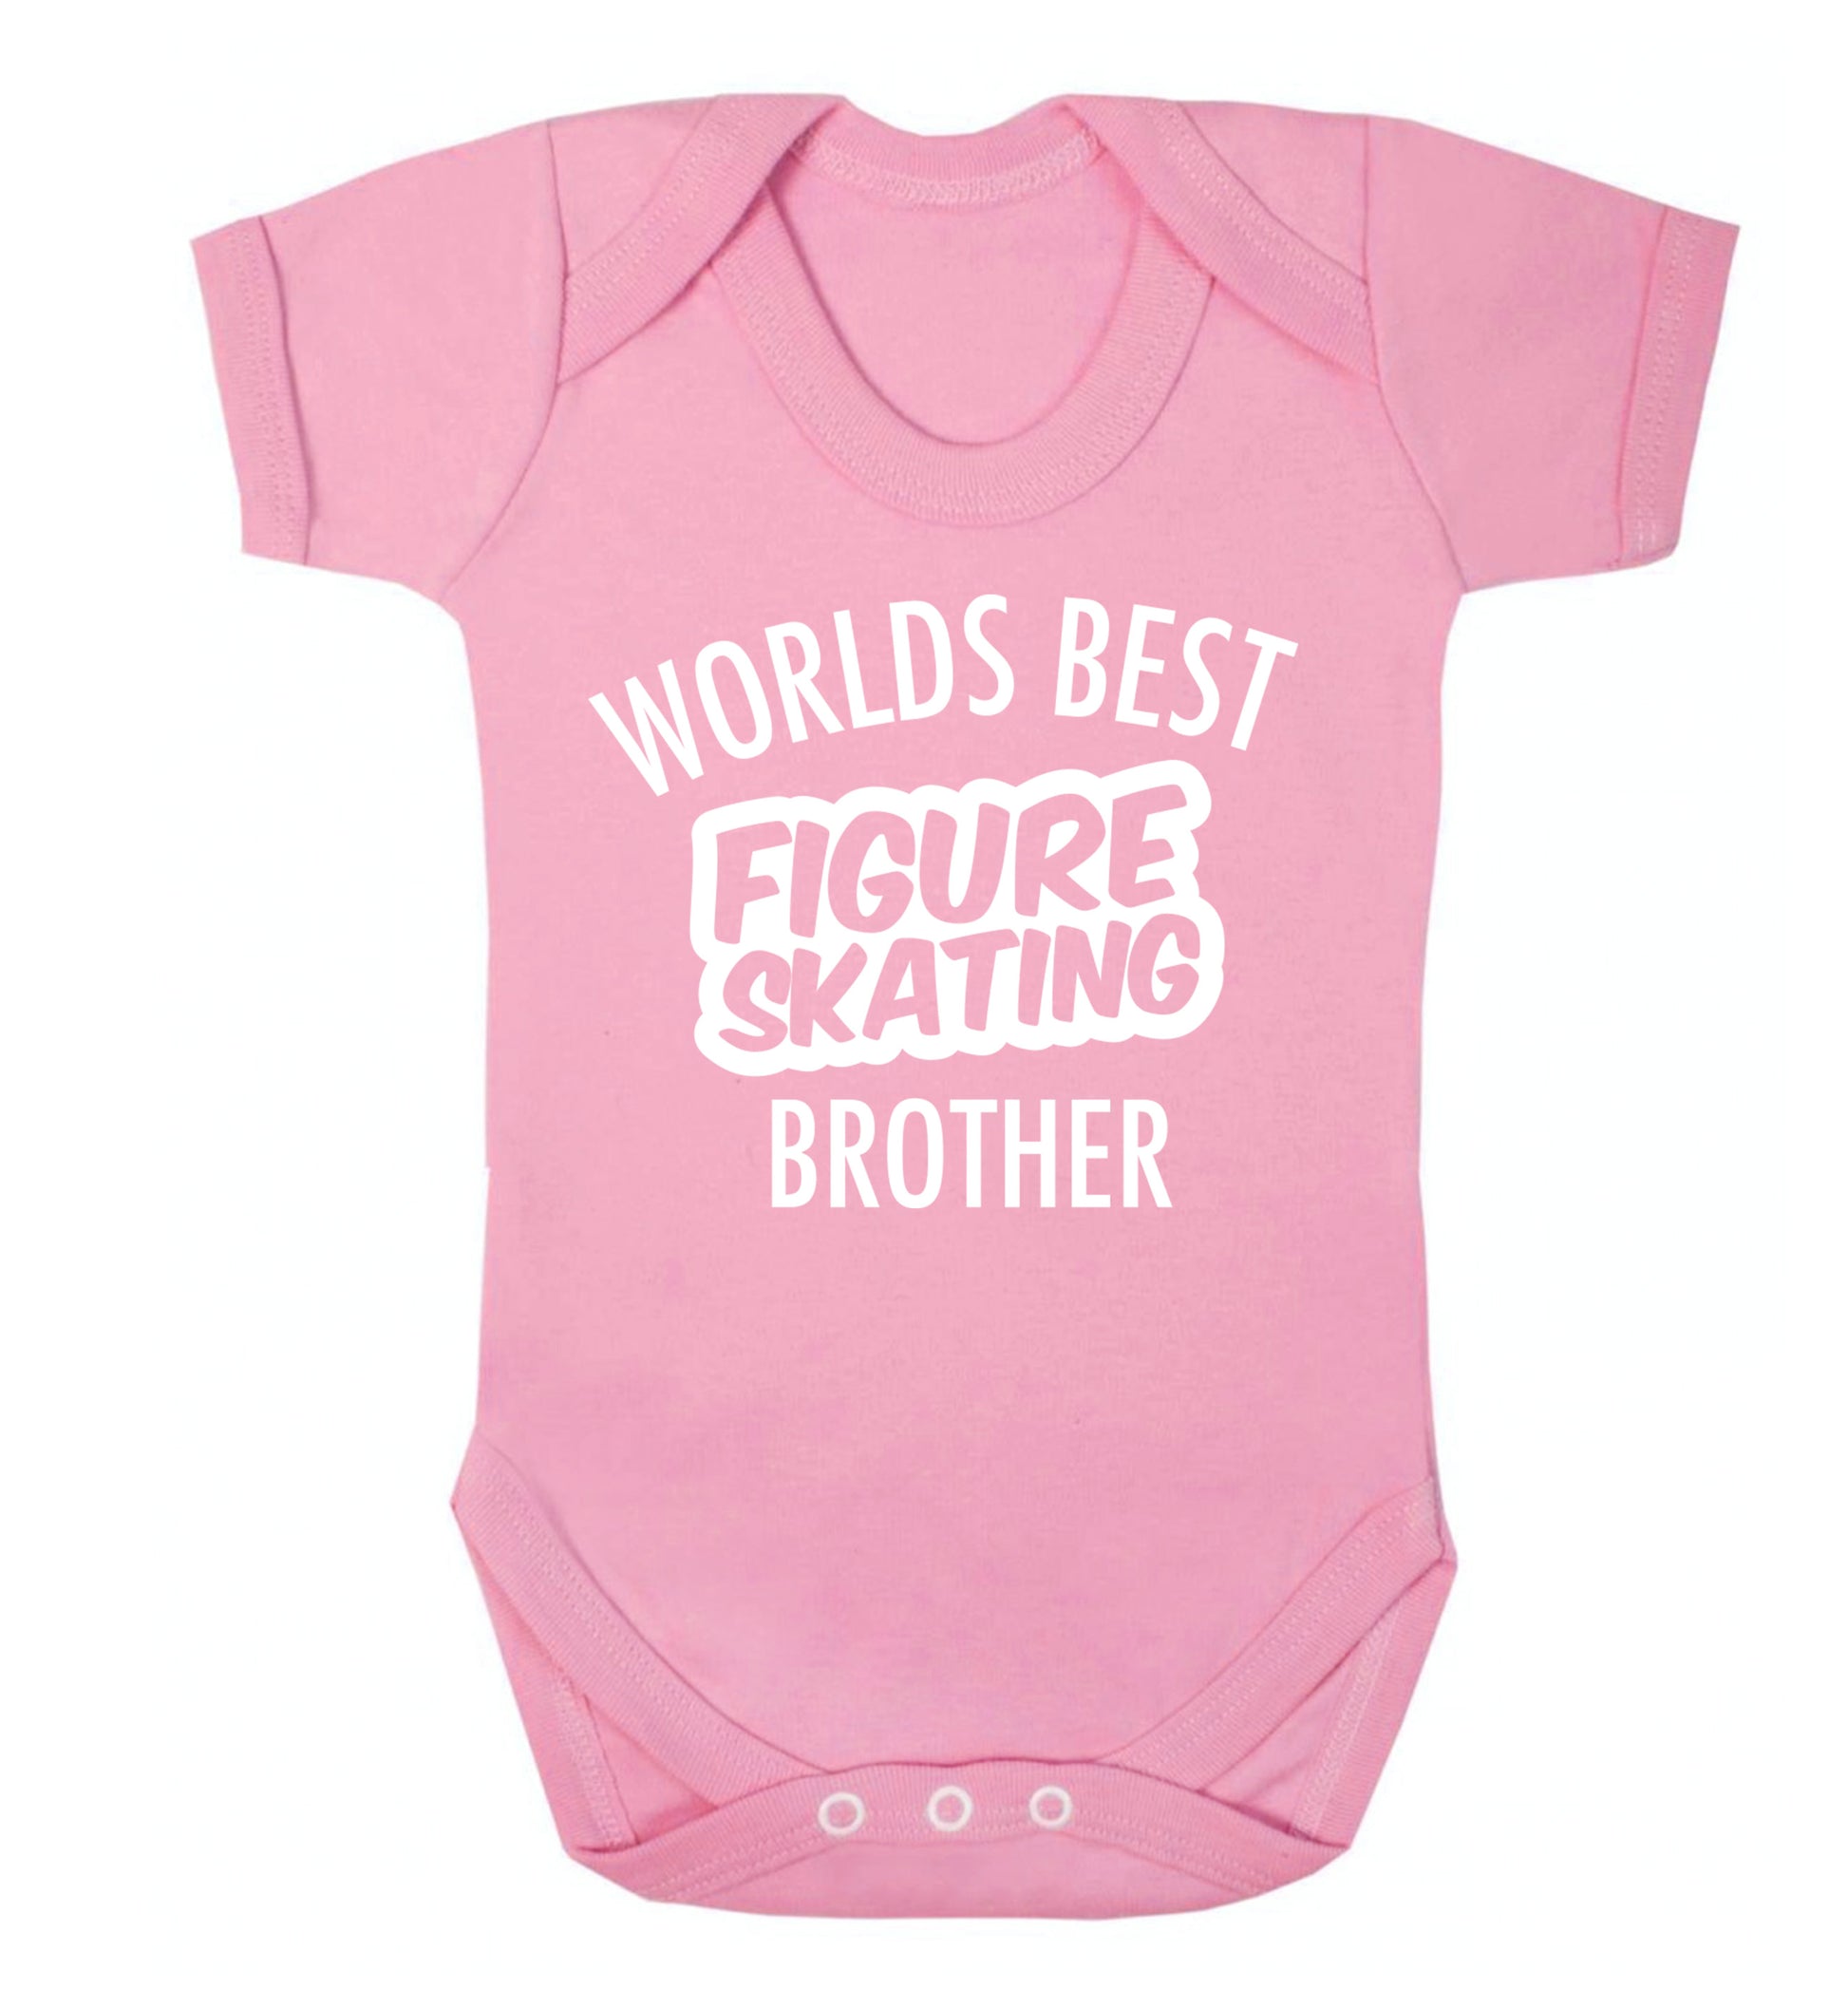 Worlds best figure skating brother Baby Vest pale pink 18-24 months